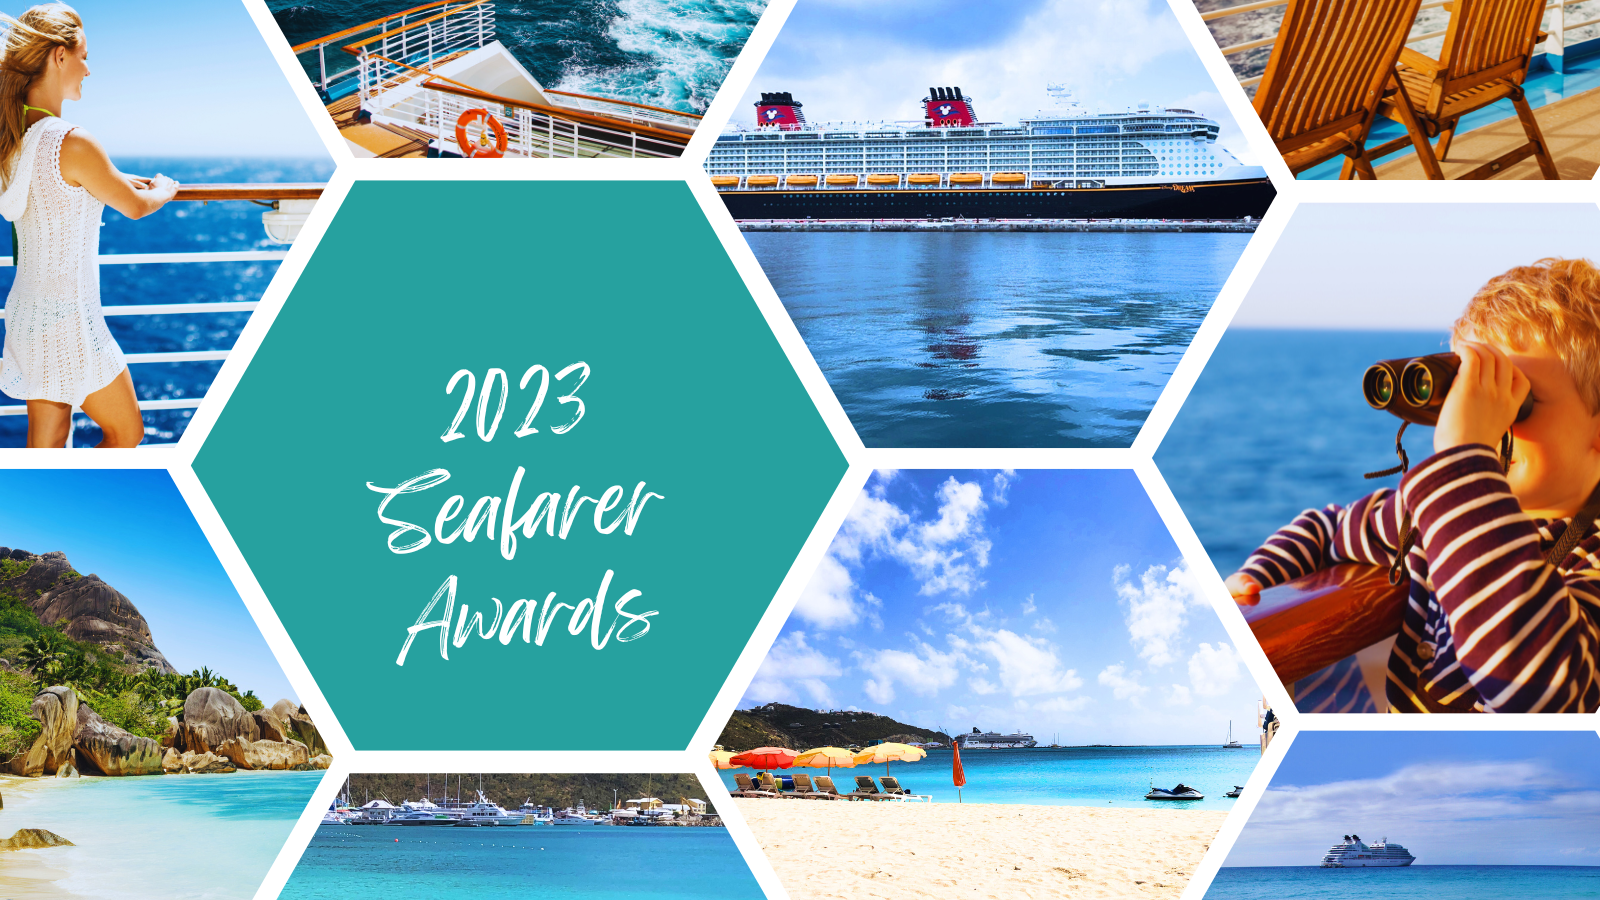 2023 Seafarer Awards